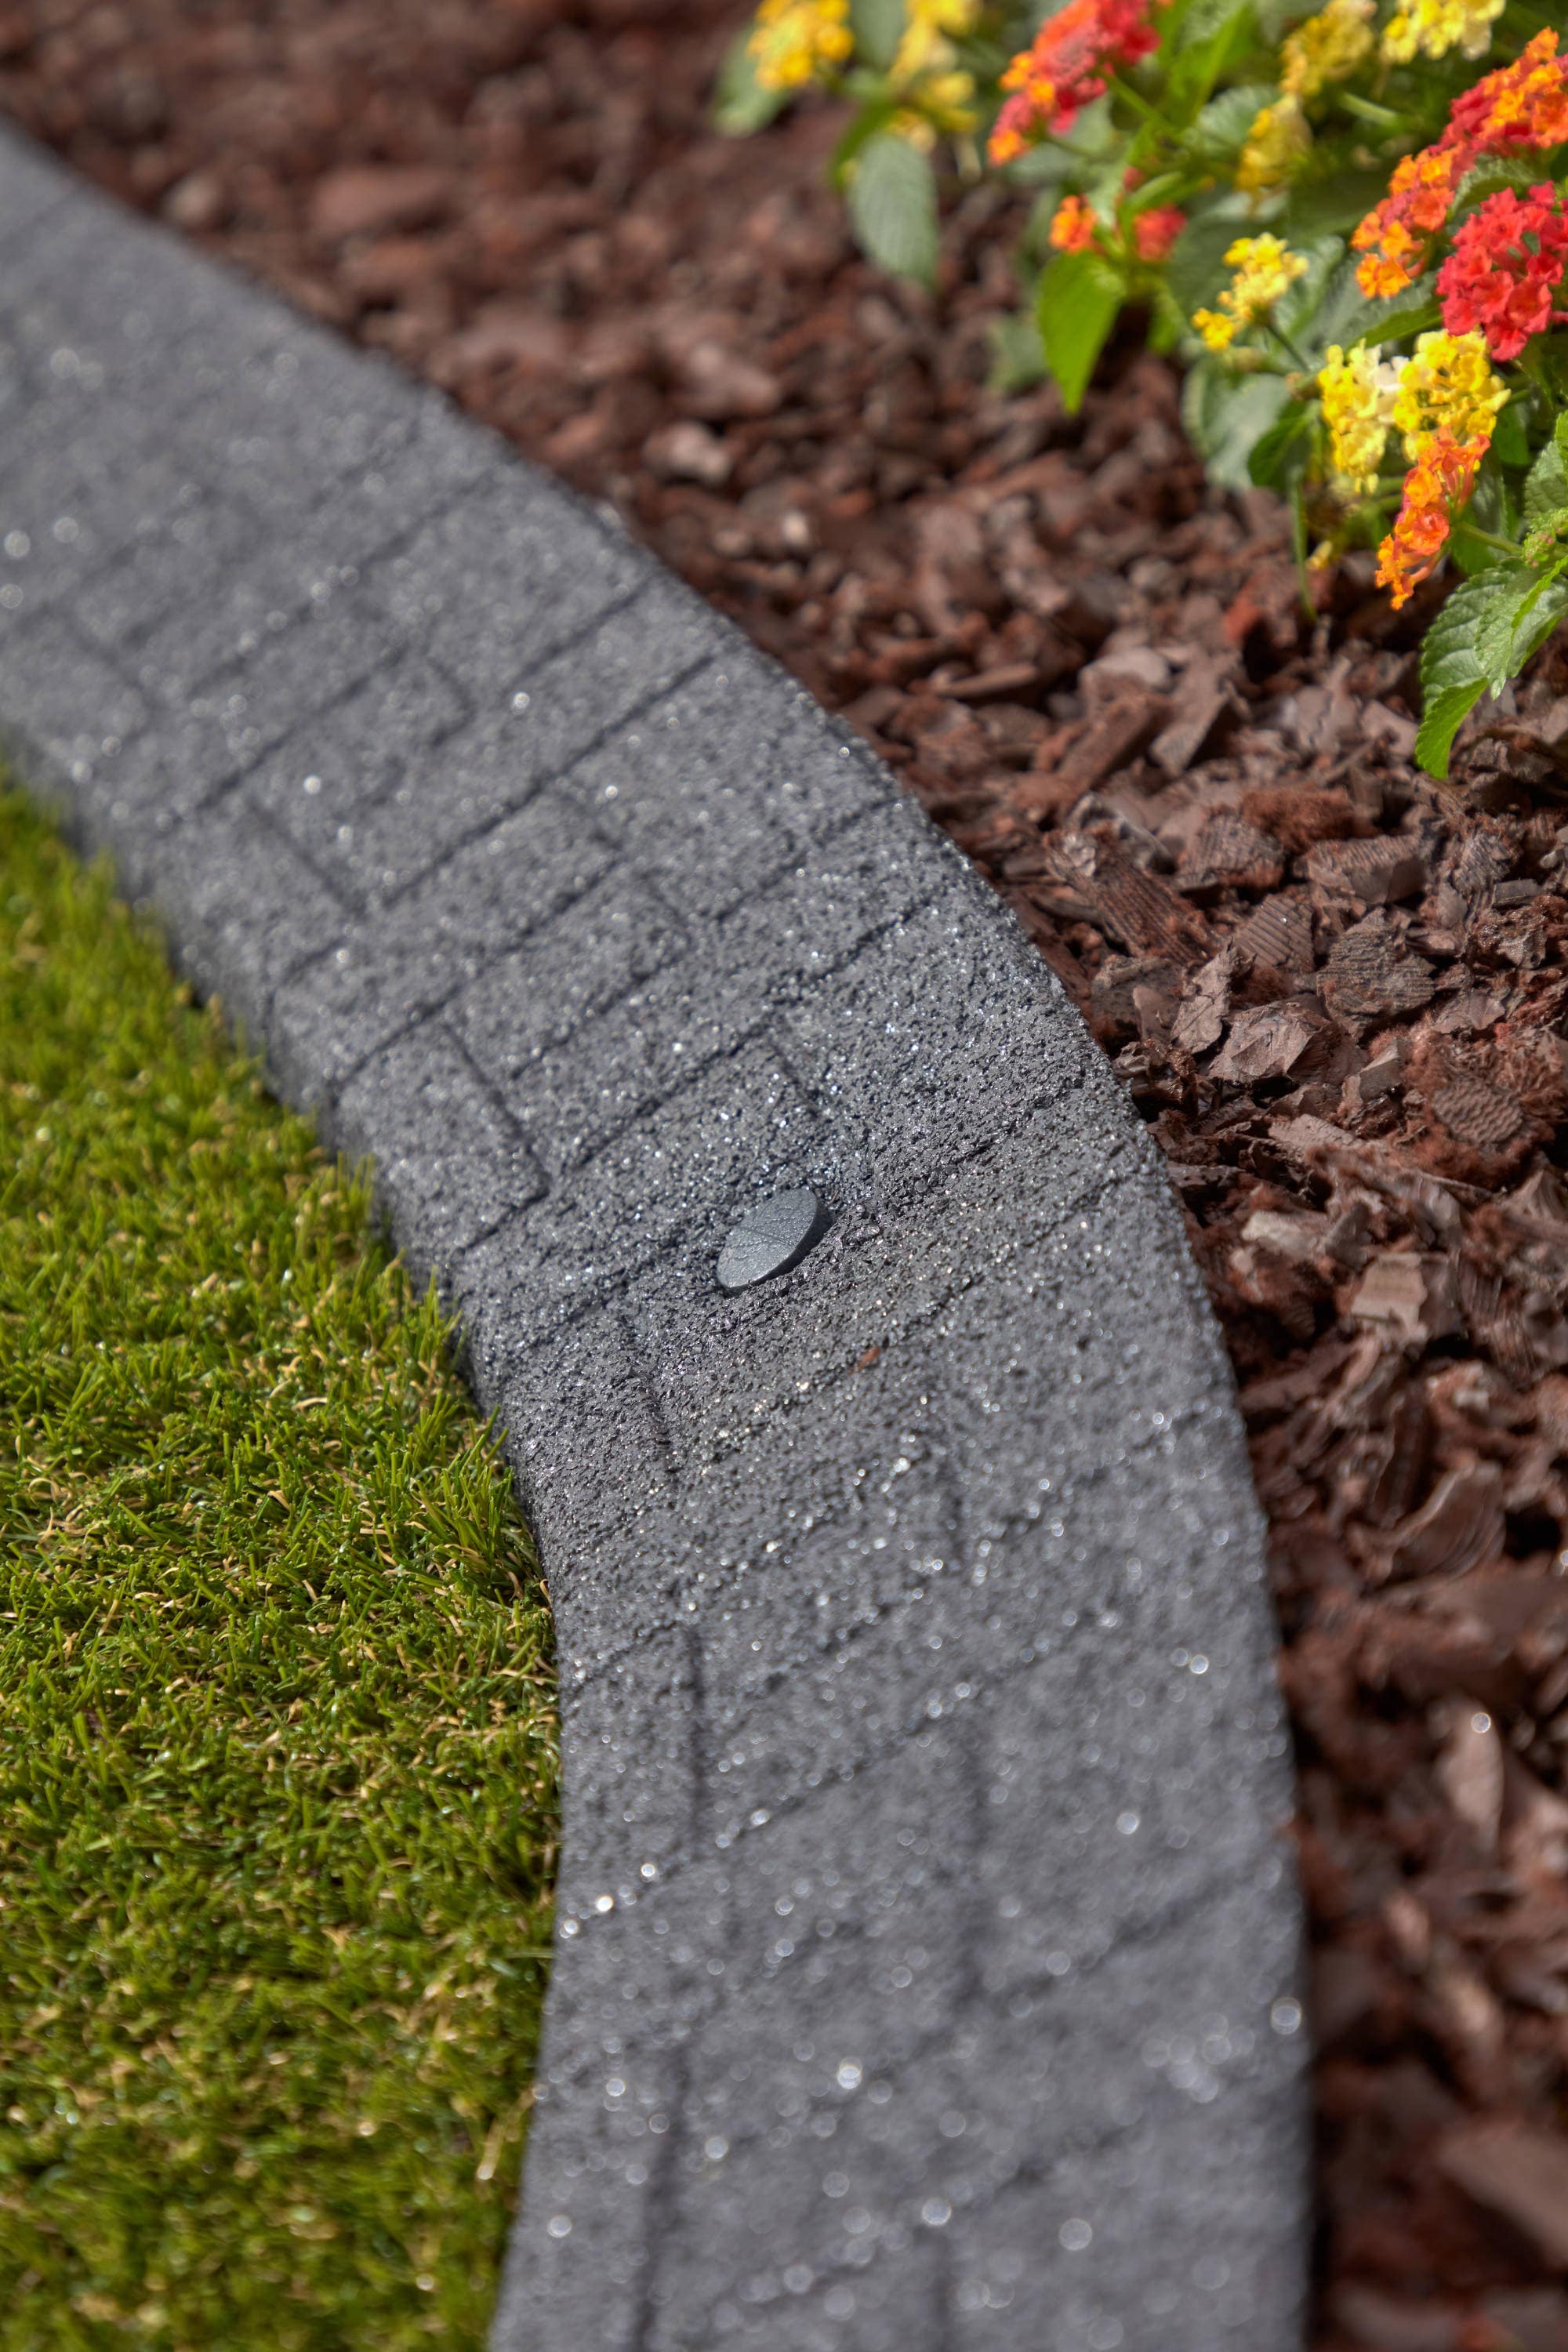 4' Gray Rubber Curb Landscape Edging at Menards®